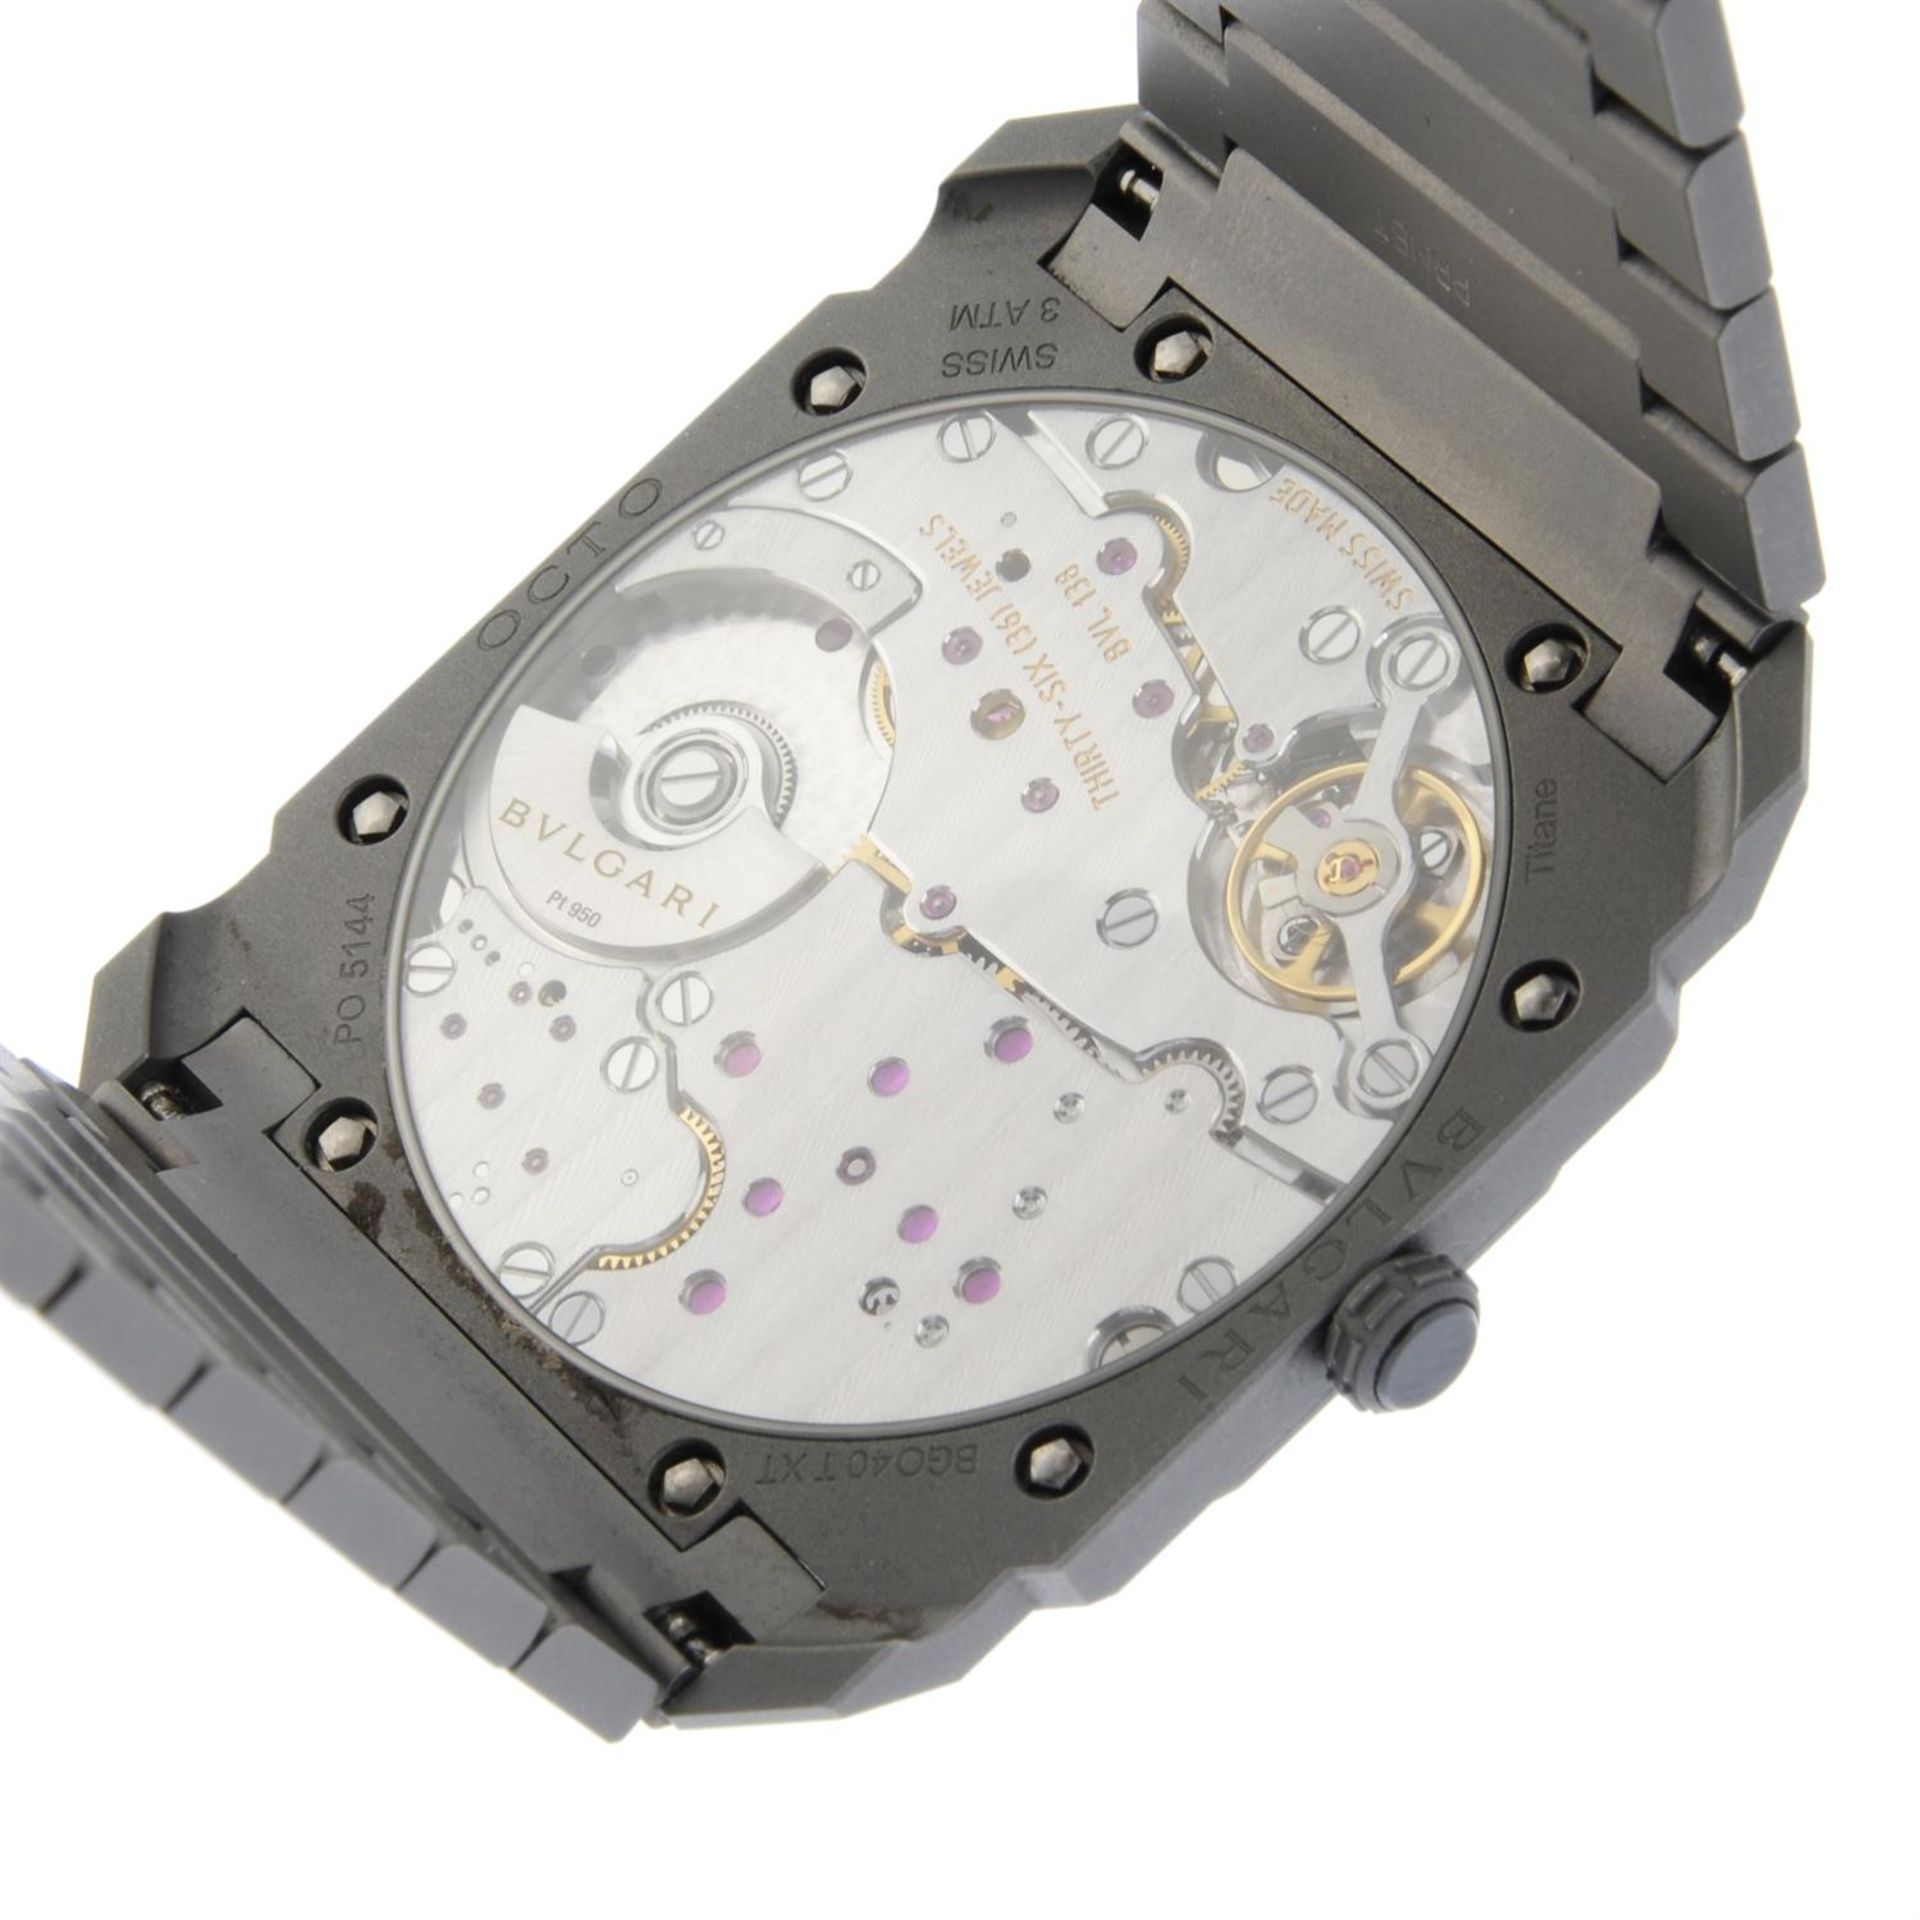 BULGARI - a titanium Octo Finissimo bracelet watch, 40mm. - Image 4 of 6